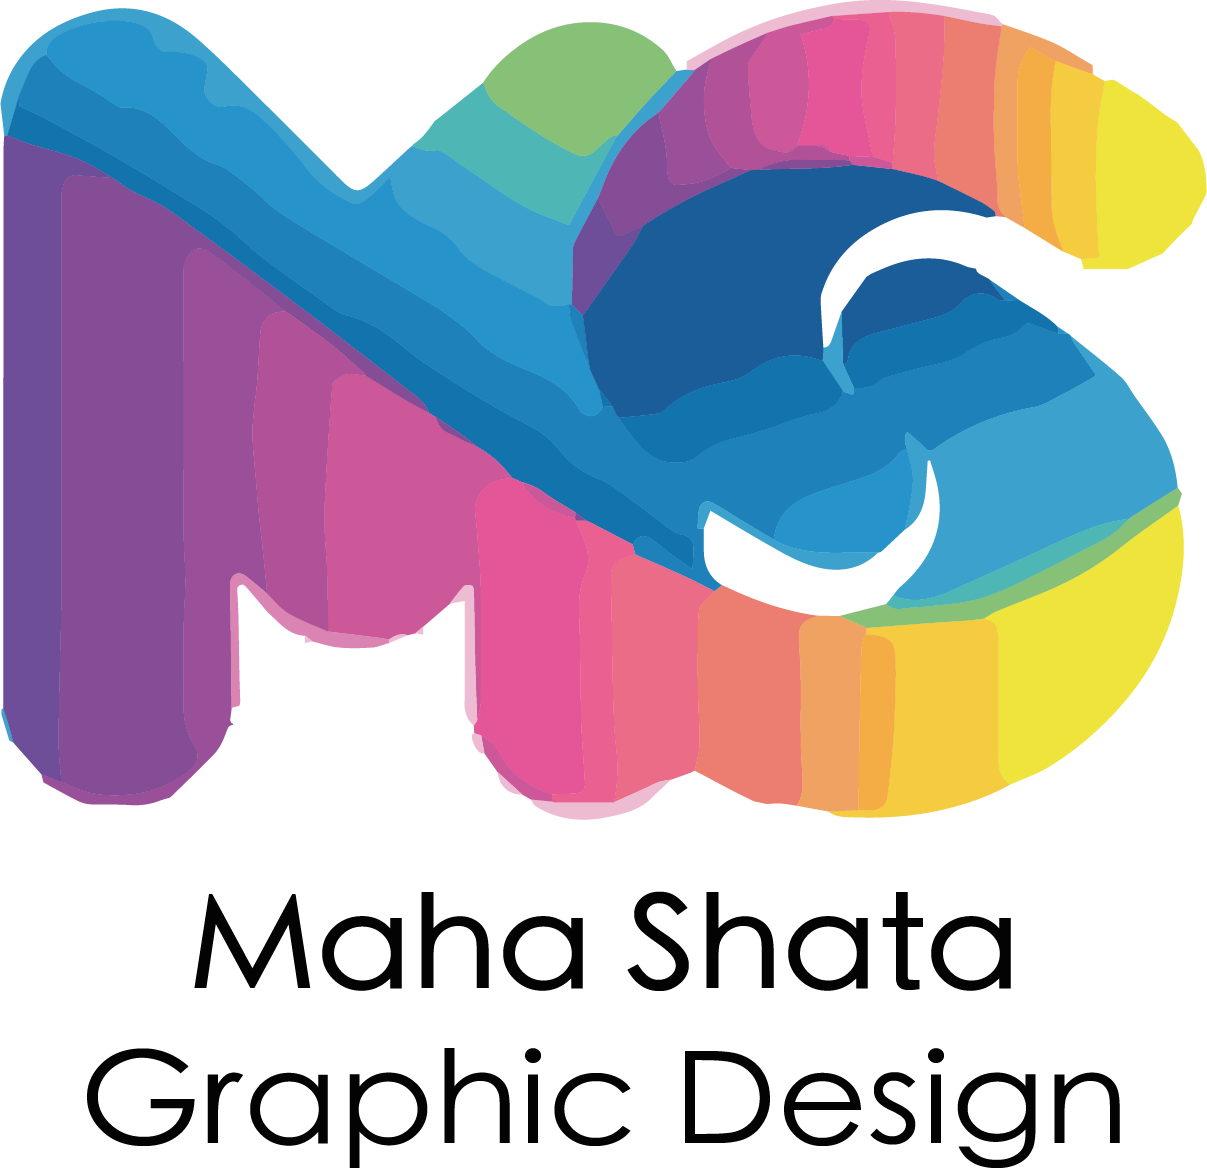 Maha Shata's Portfolio